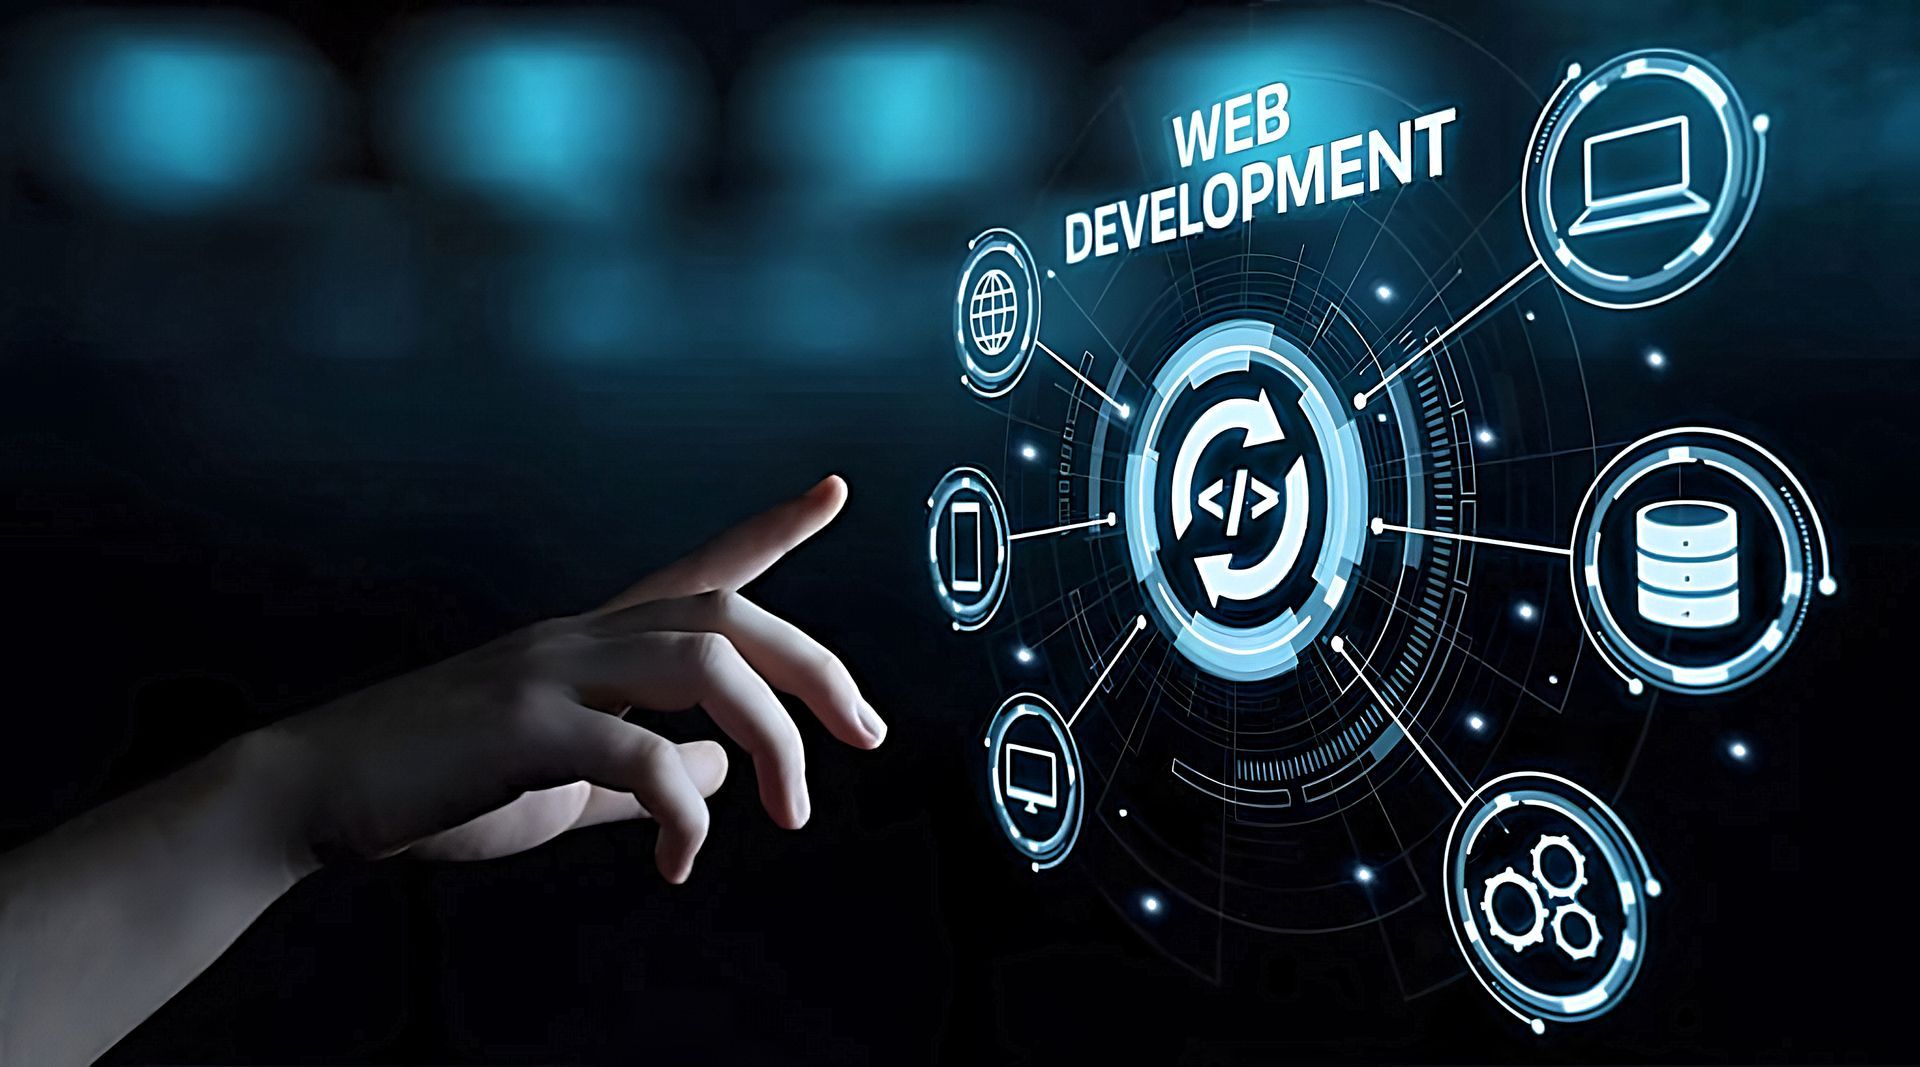 web development services page image